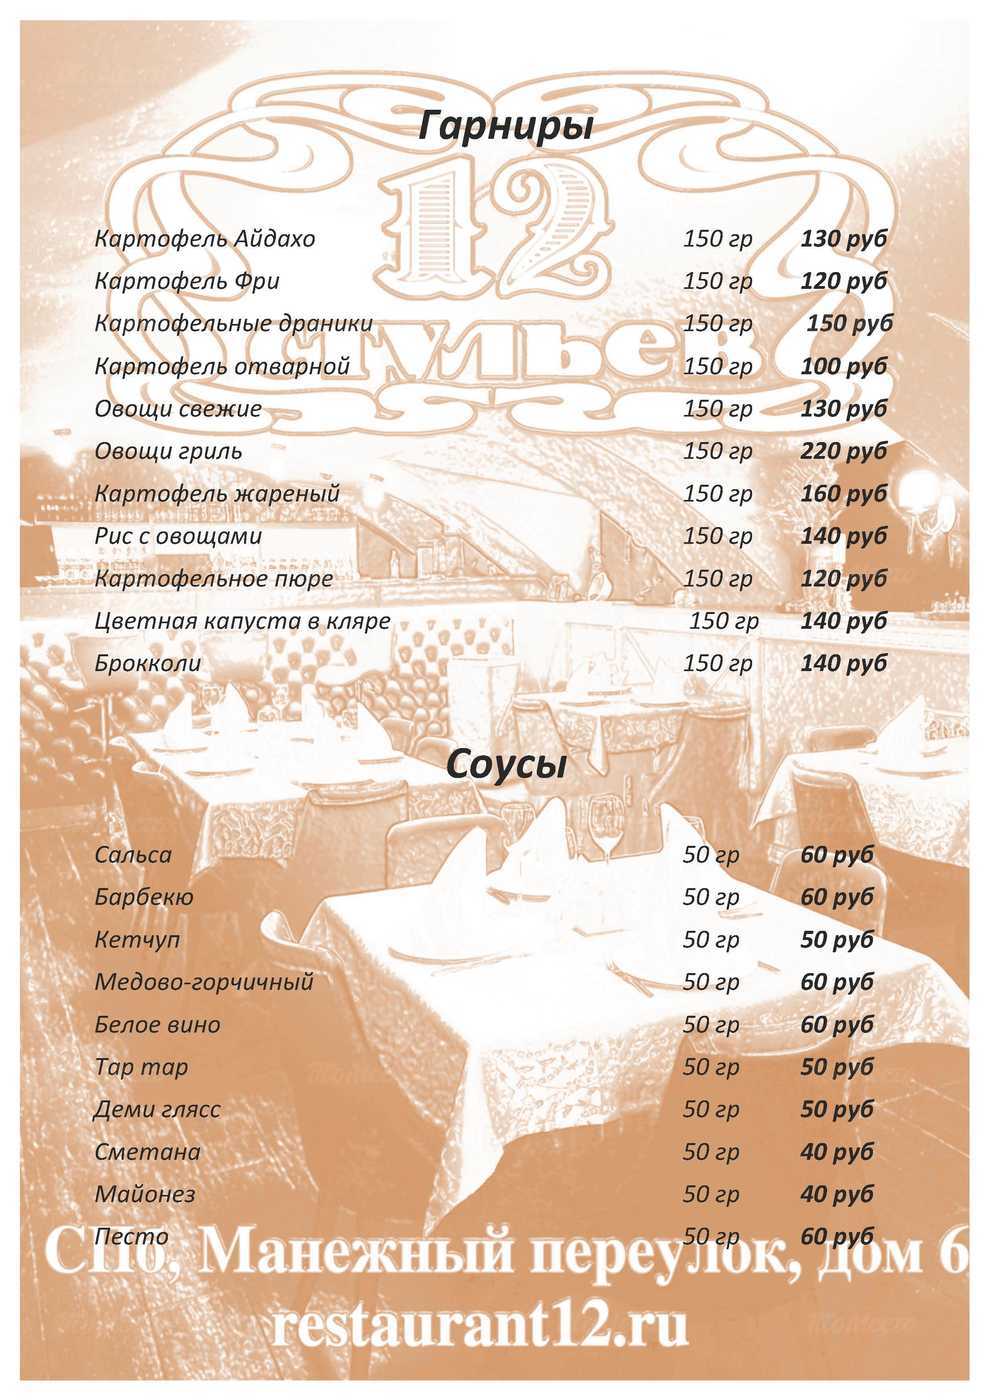 Ресторан 12 стульев белгород меню цены отзывы